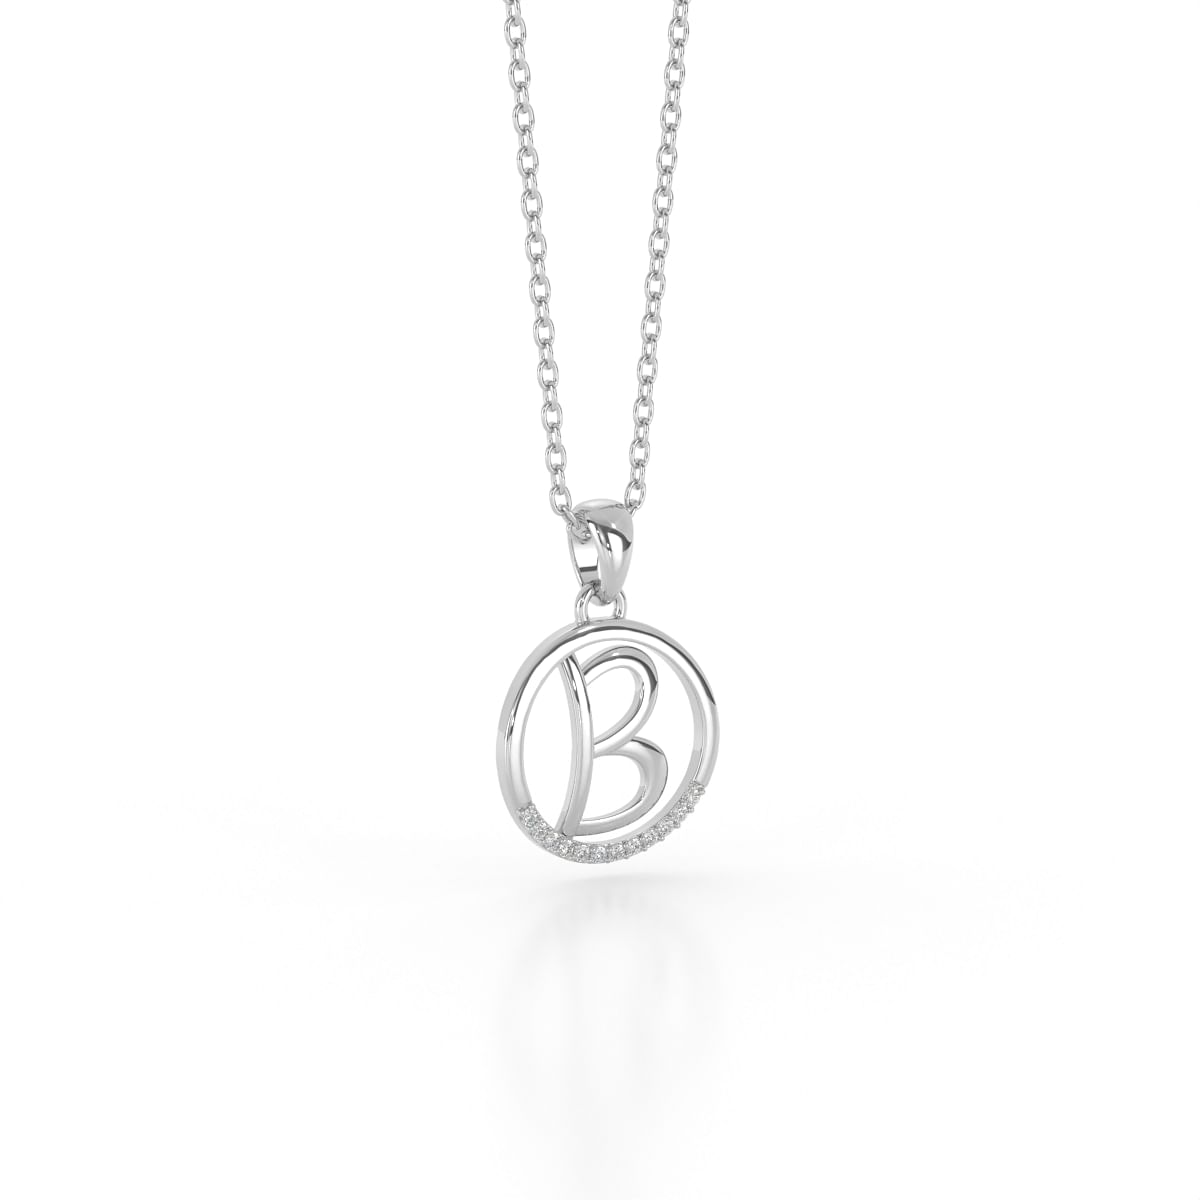 B Letter Round Design White Gold Diamond Pendant